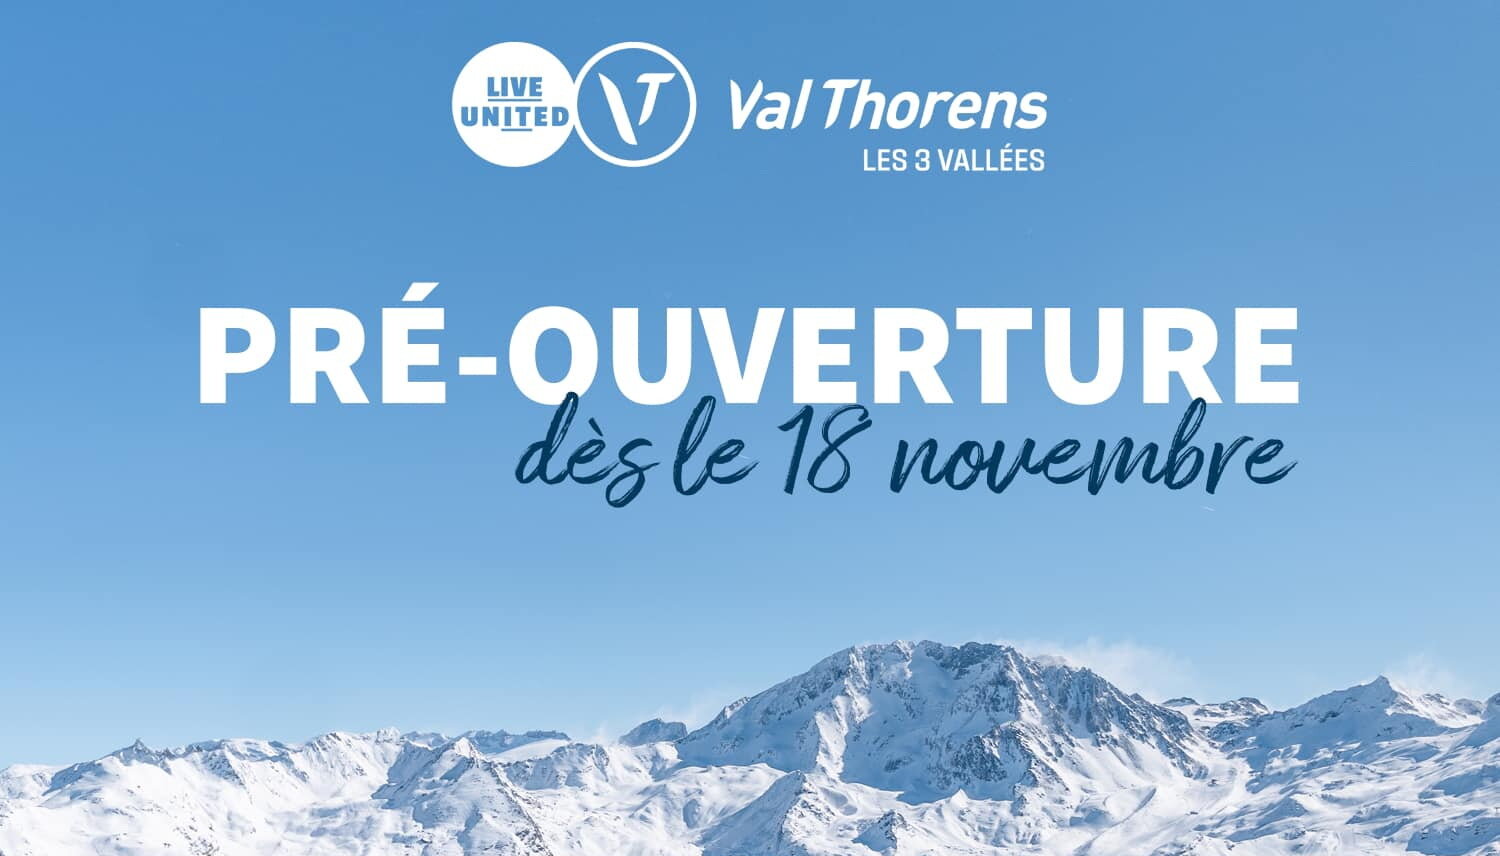 Val Thorens: nyitás november 18-án